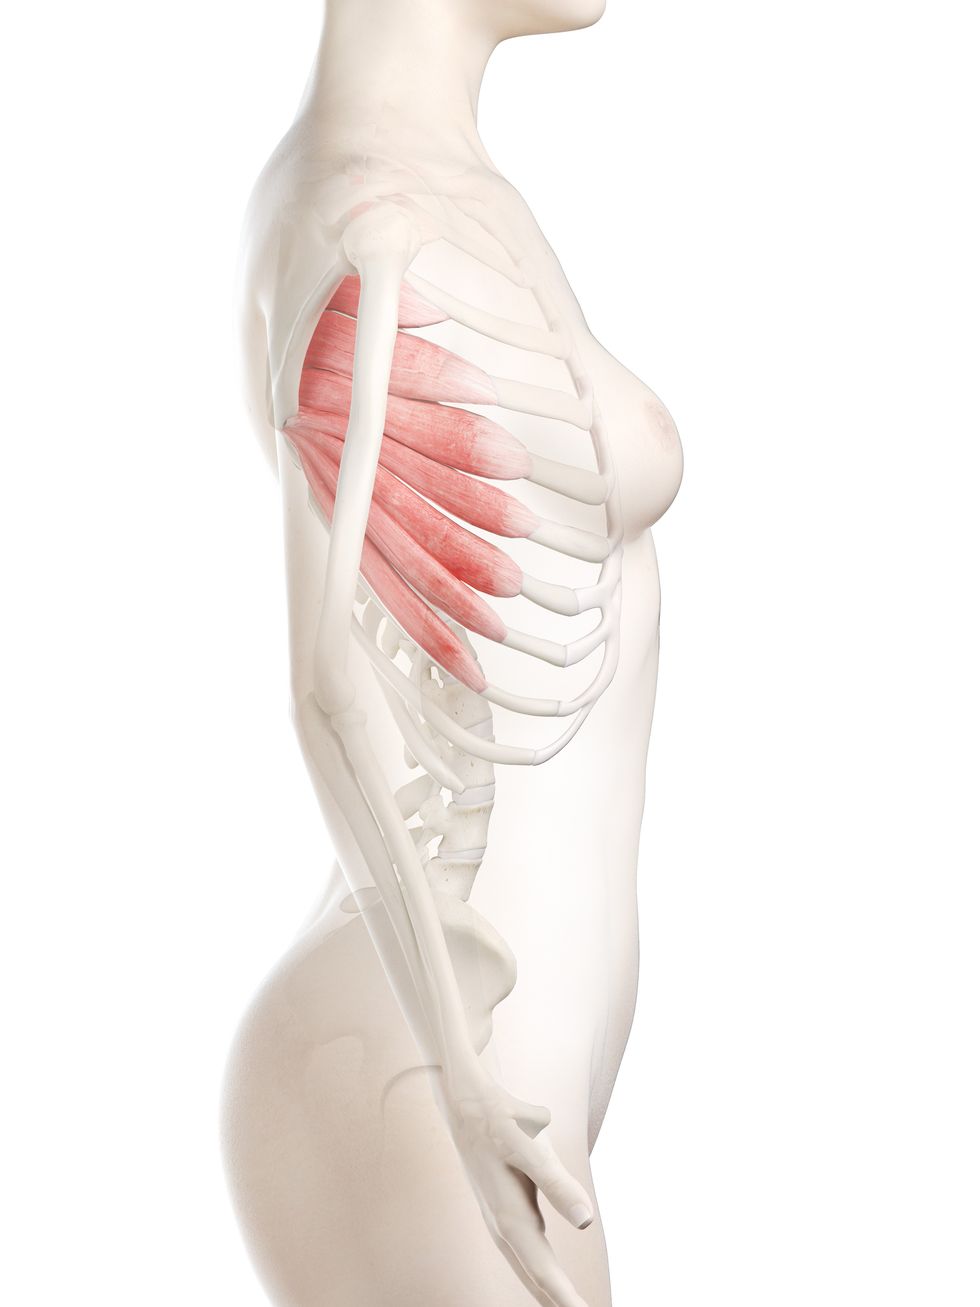 serratus anterior muscle, illustration